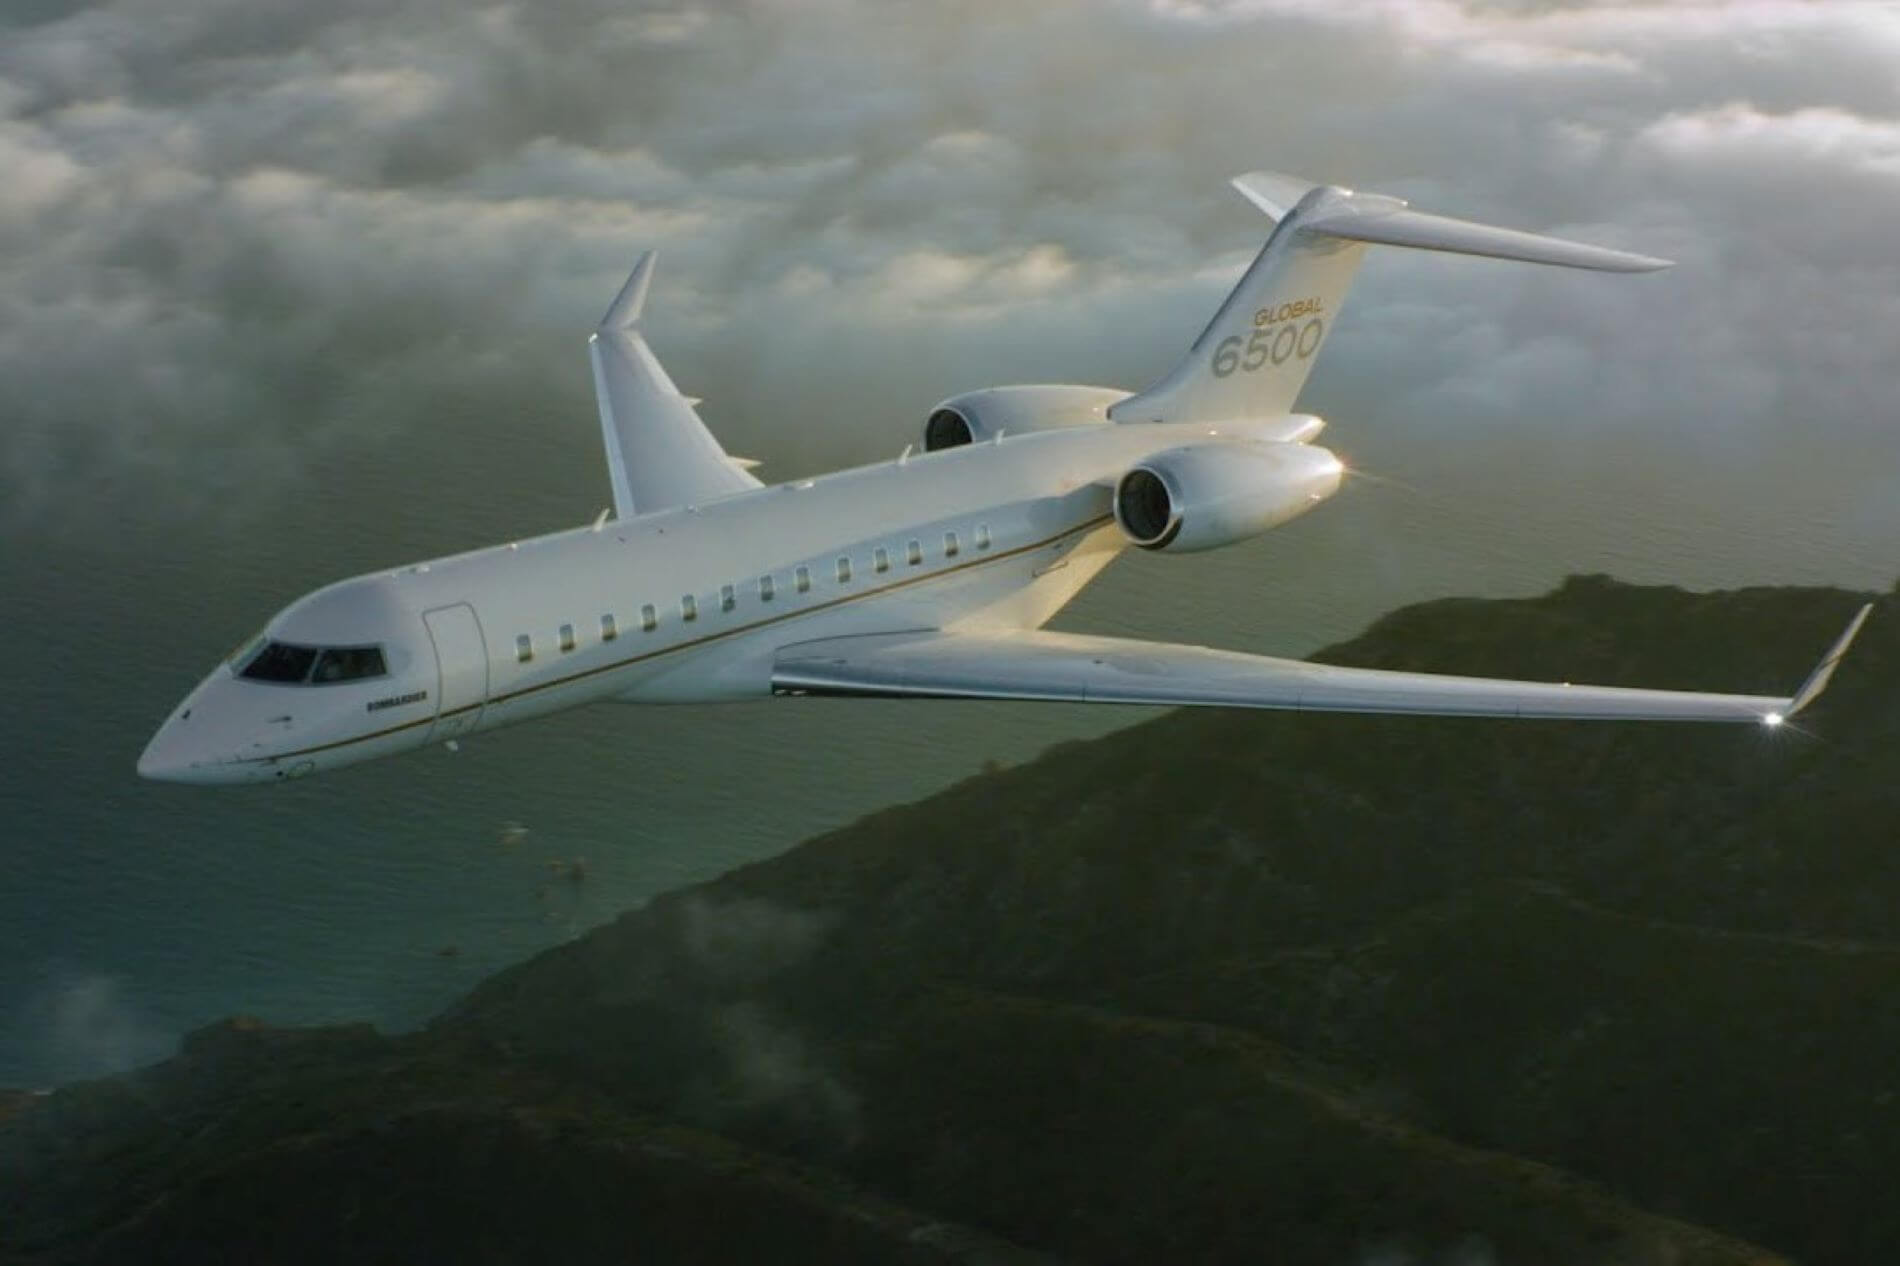 Bombardier Global 6500 AeroTime News